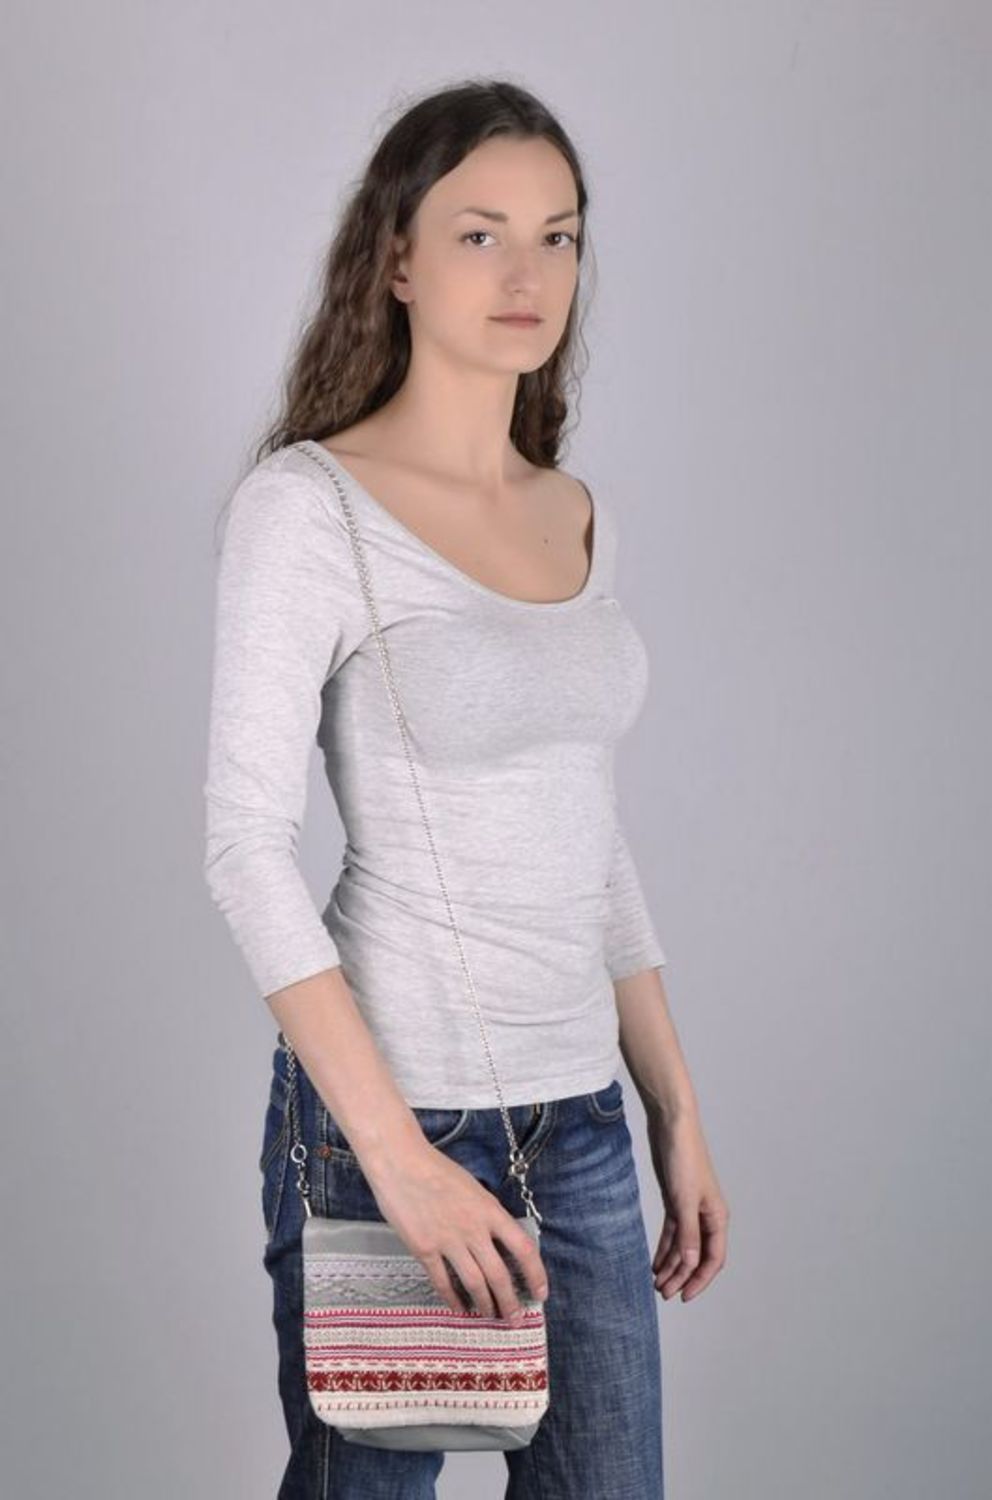 Women's shoulder leather bag photo 2